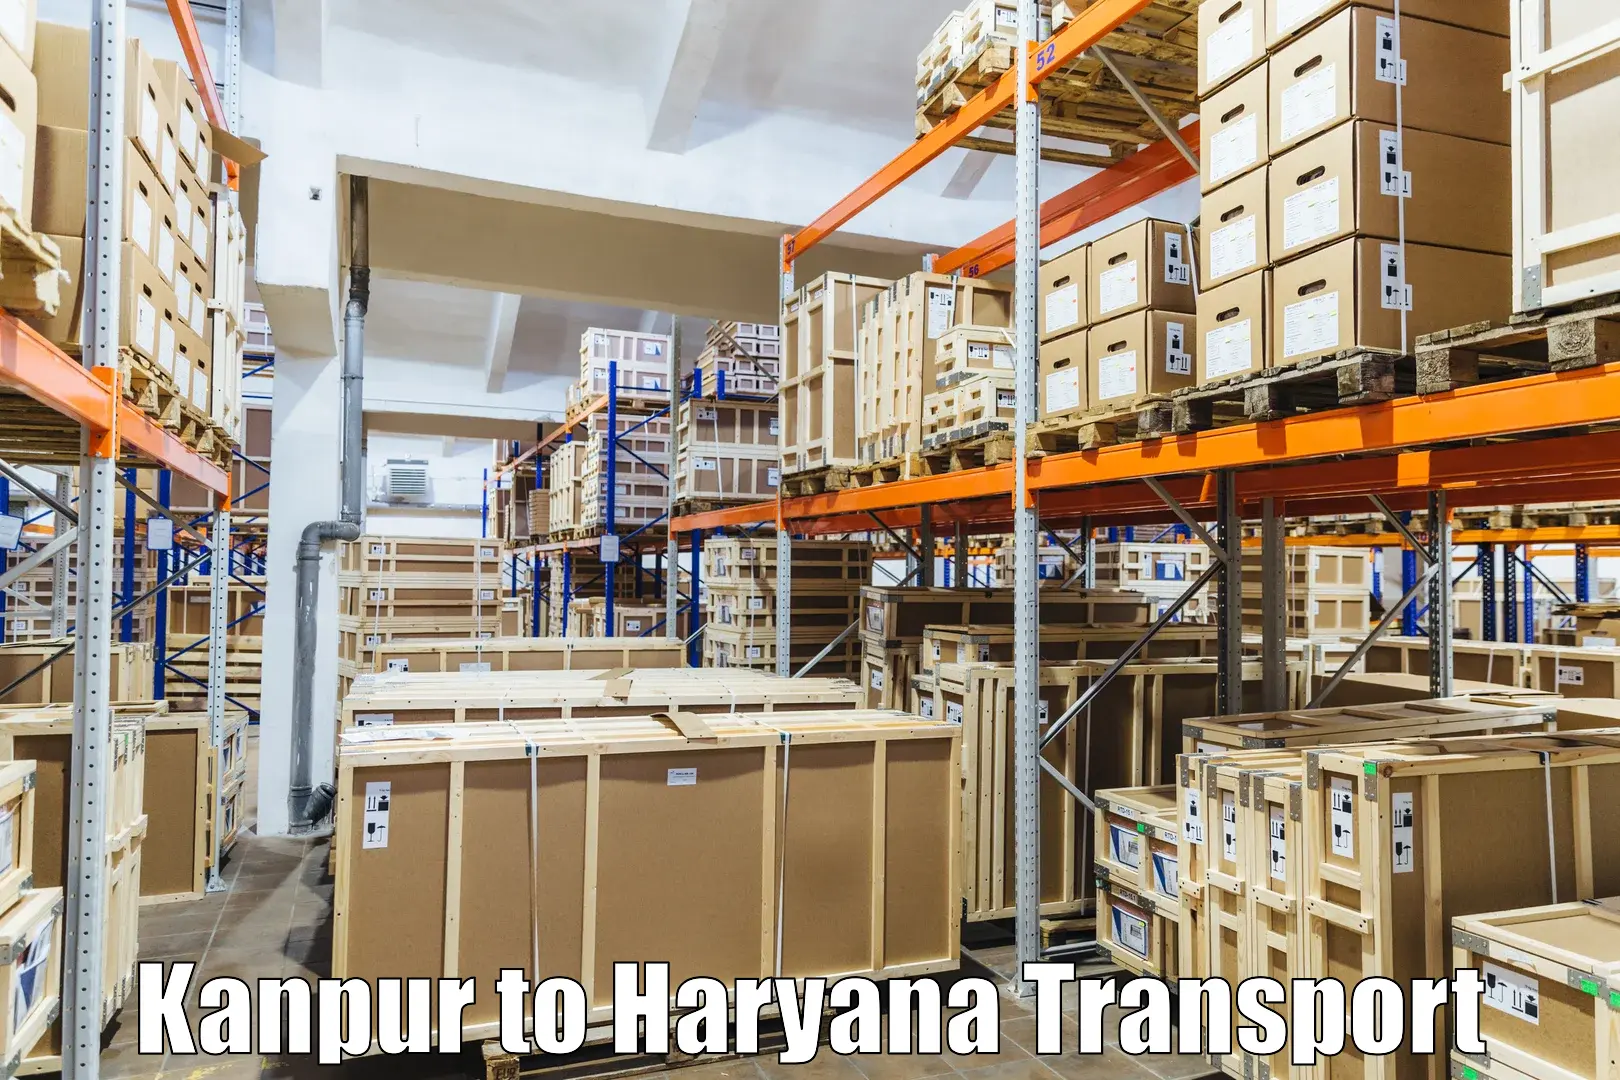 Shipping partner Kanpur to Gurgaon